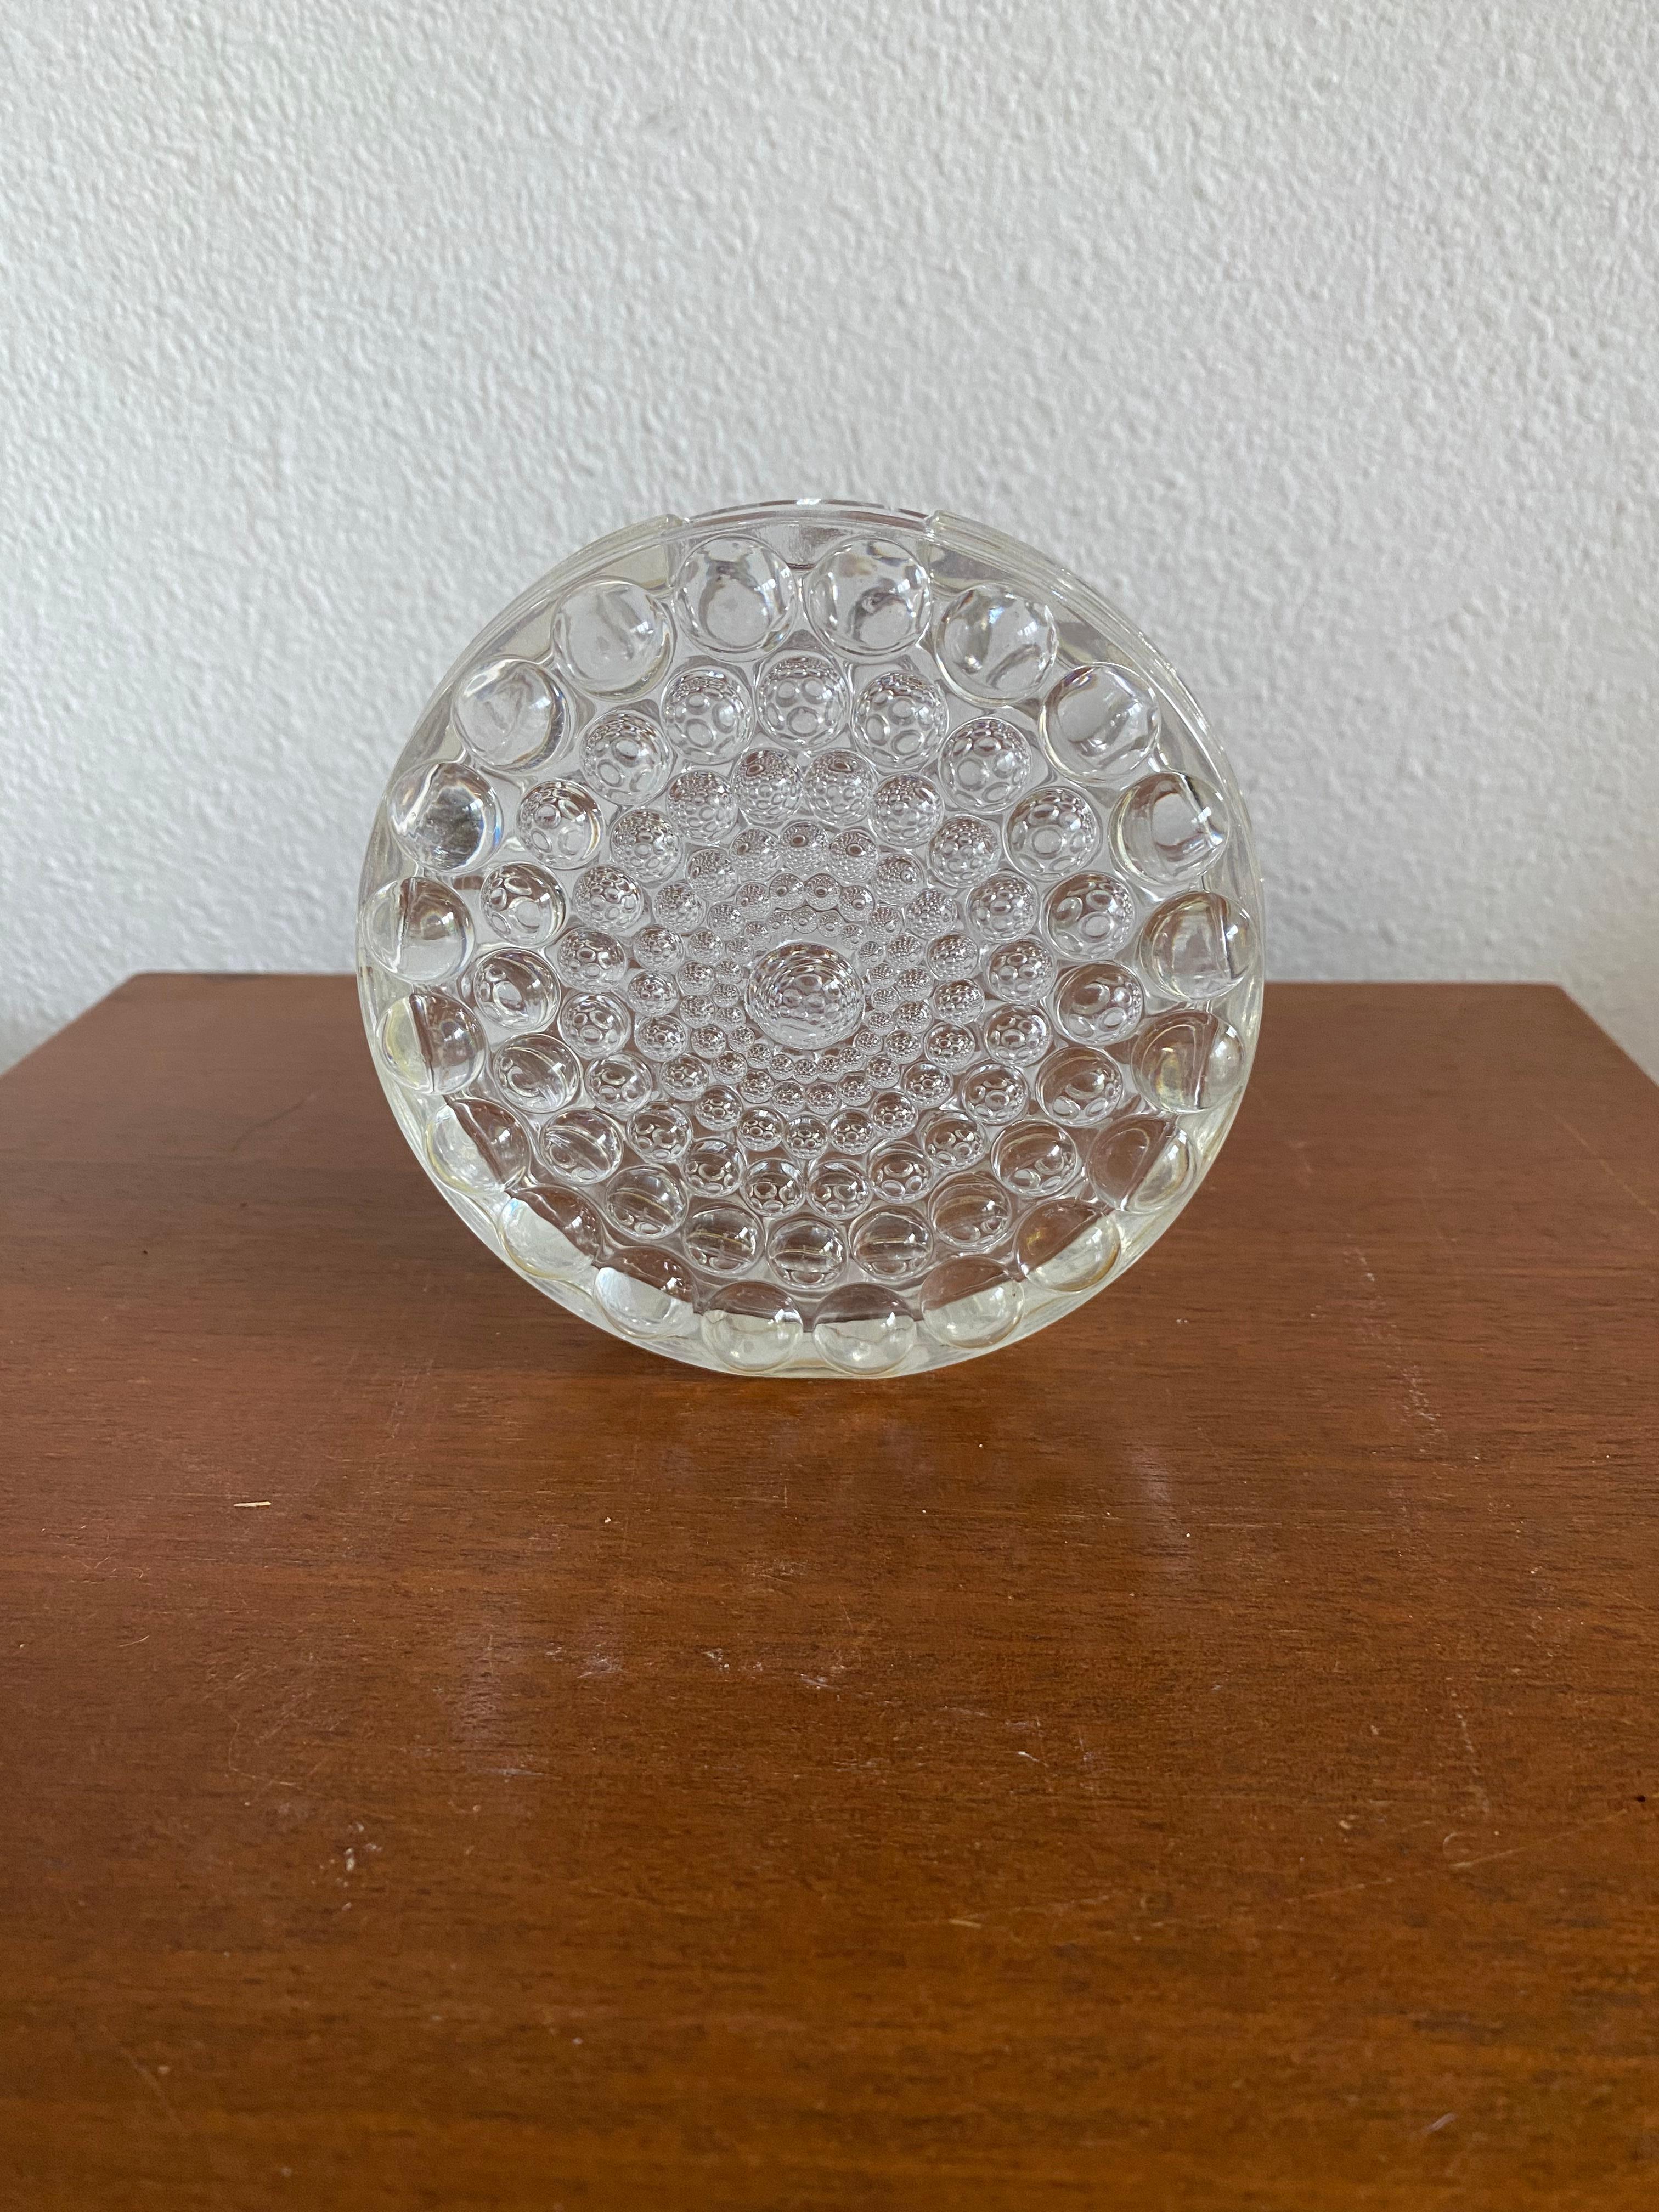 A very nice bubble solifleur glass vase.